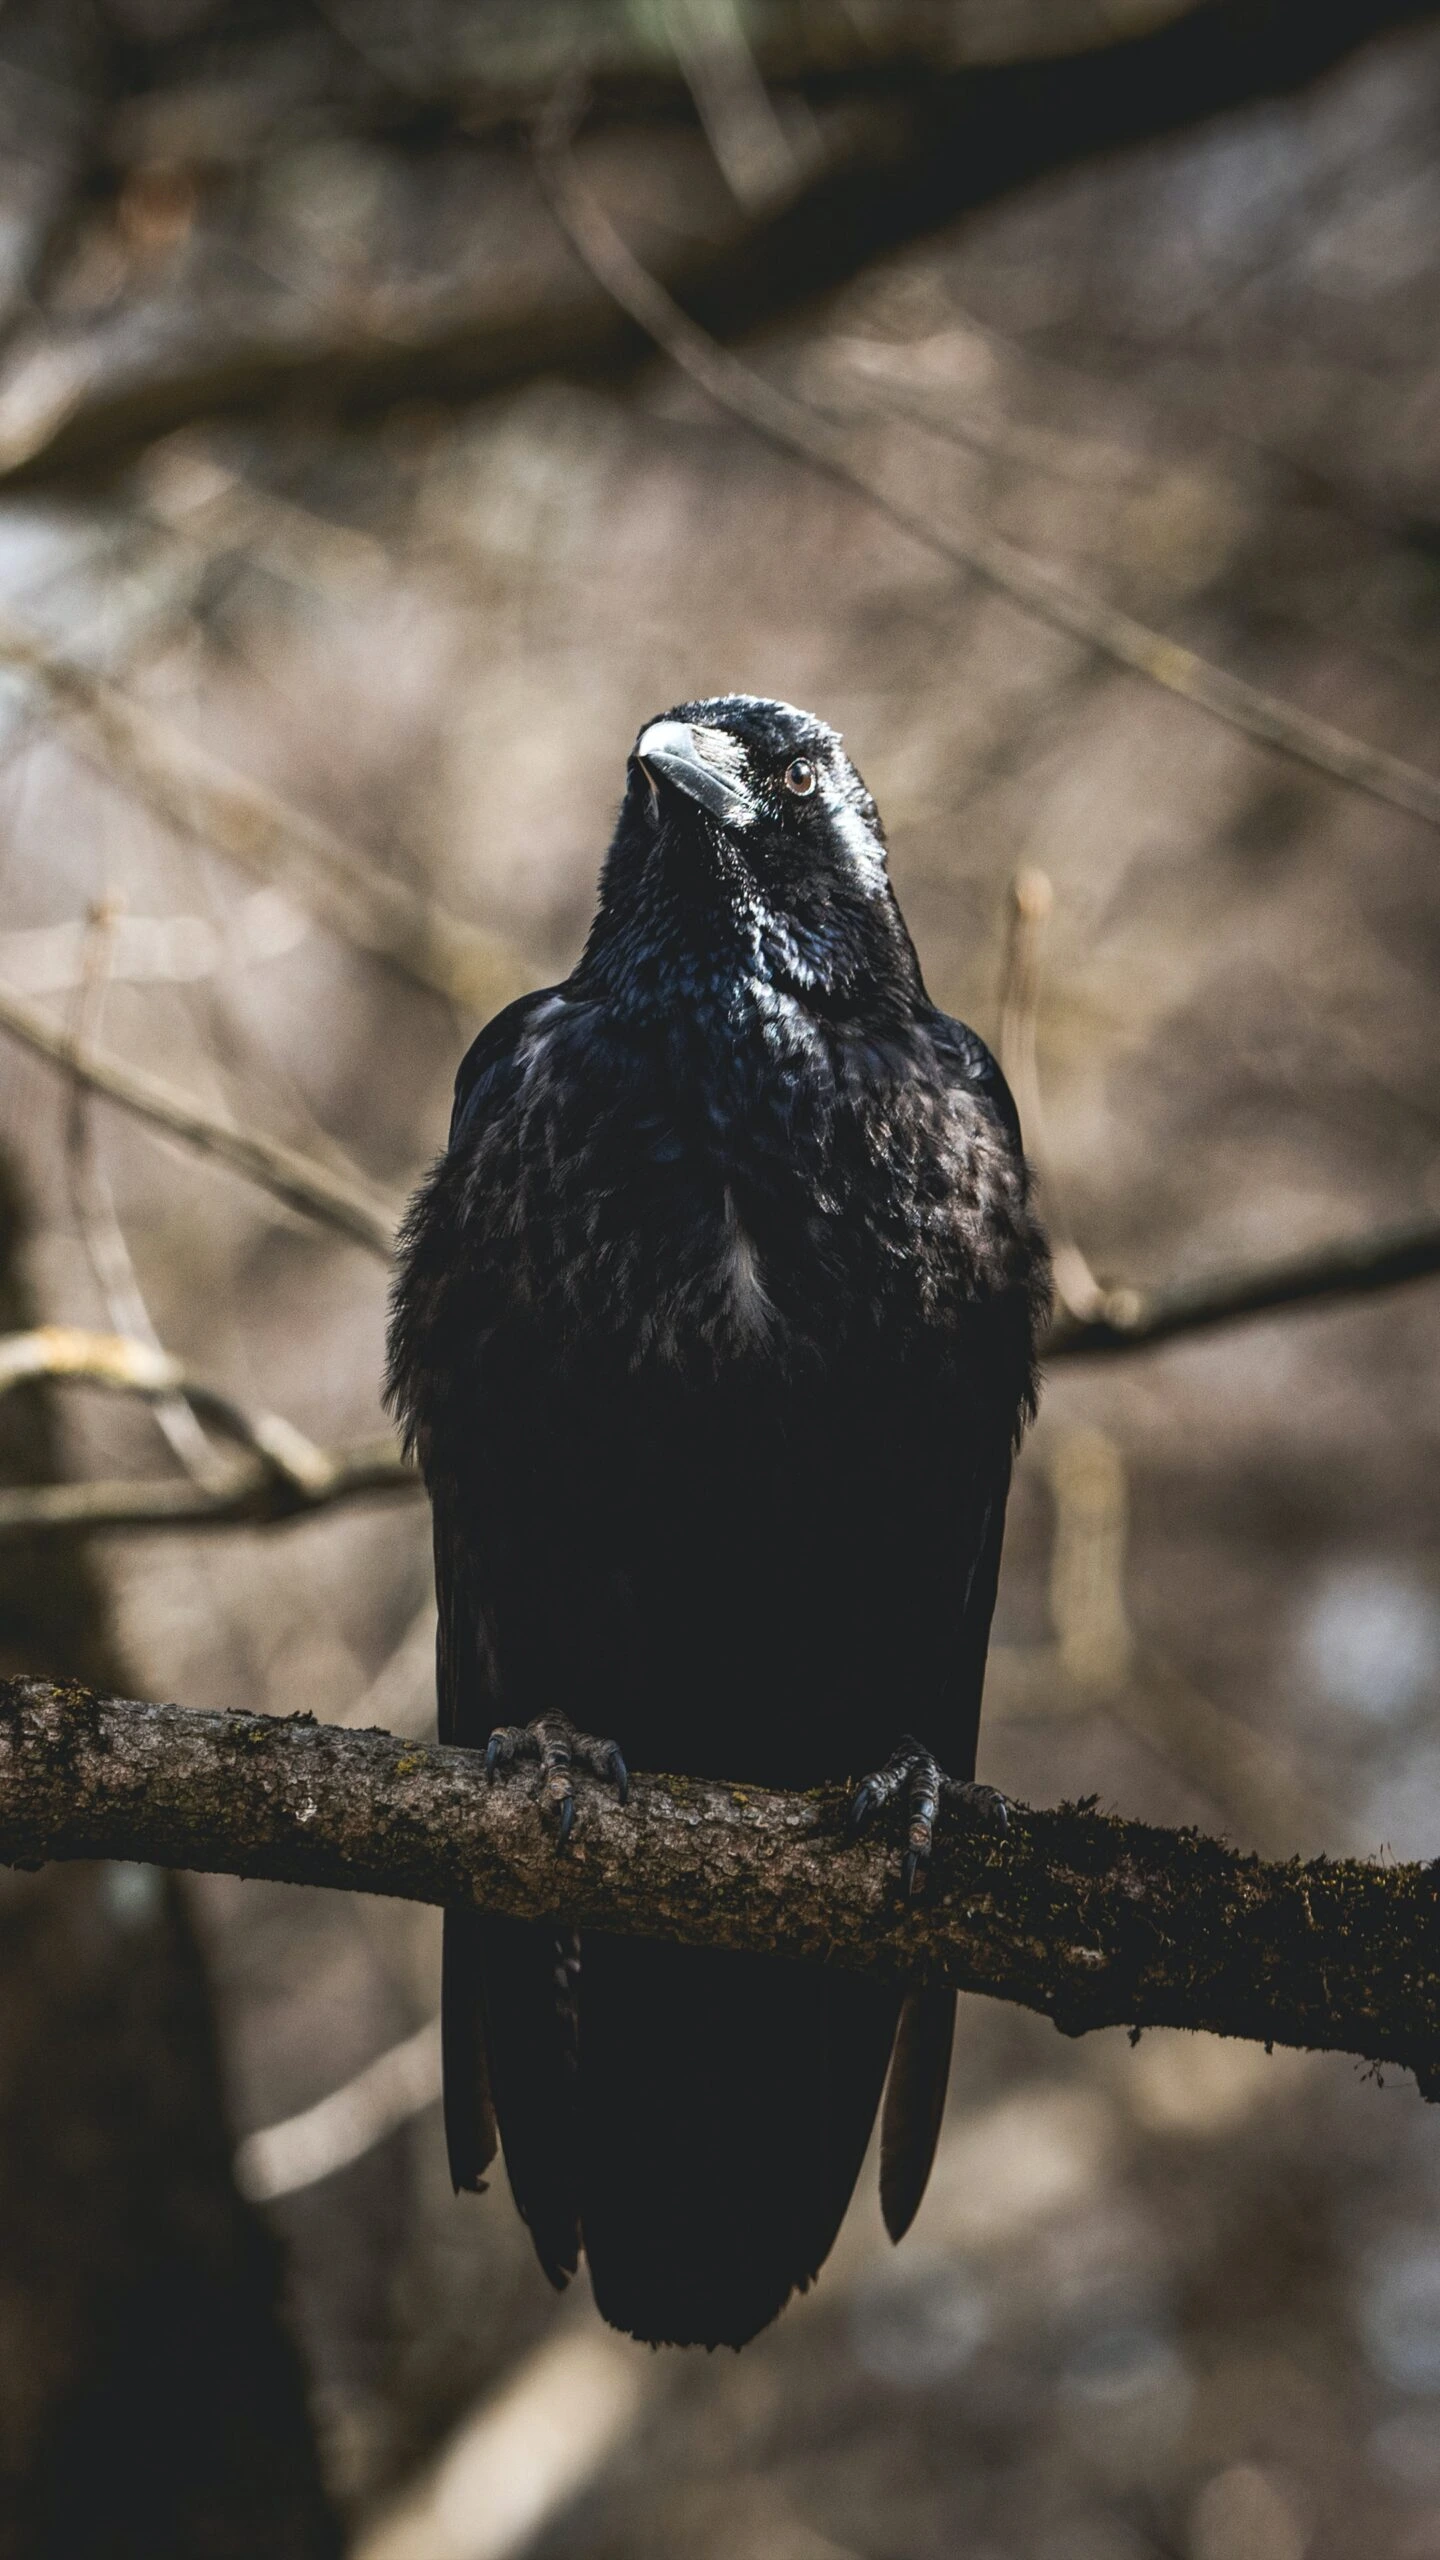 Raven on tree branch by Valentin Petkov on Unsplash